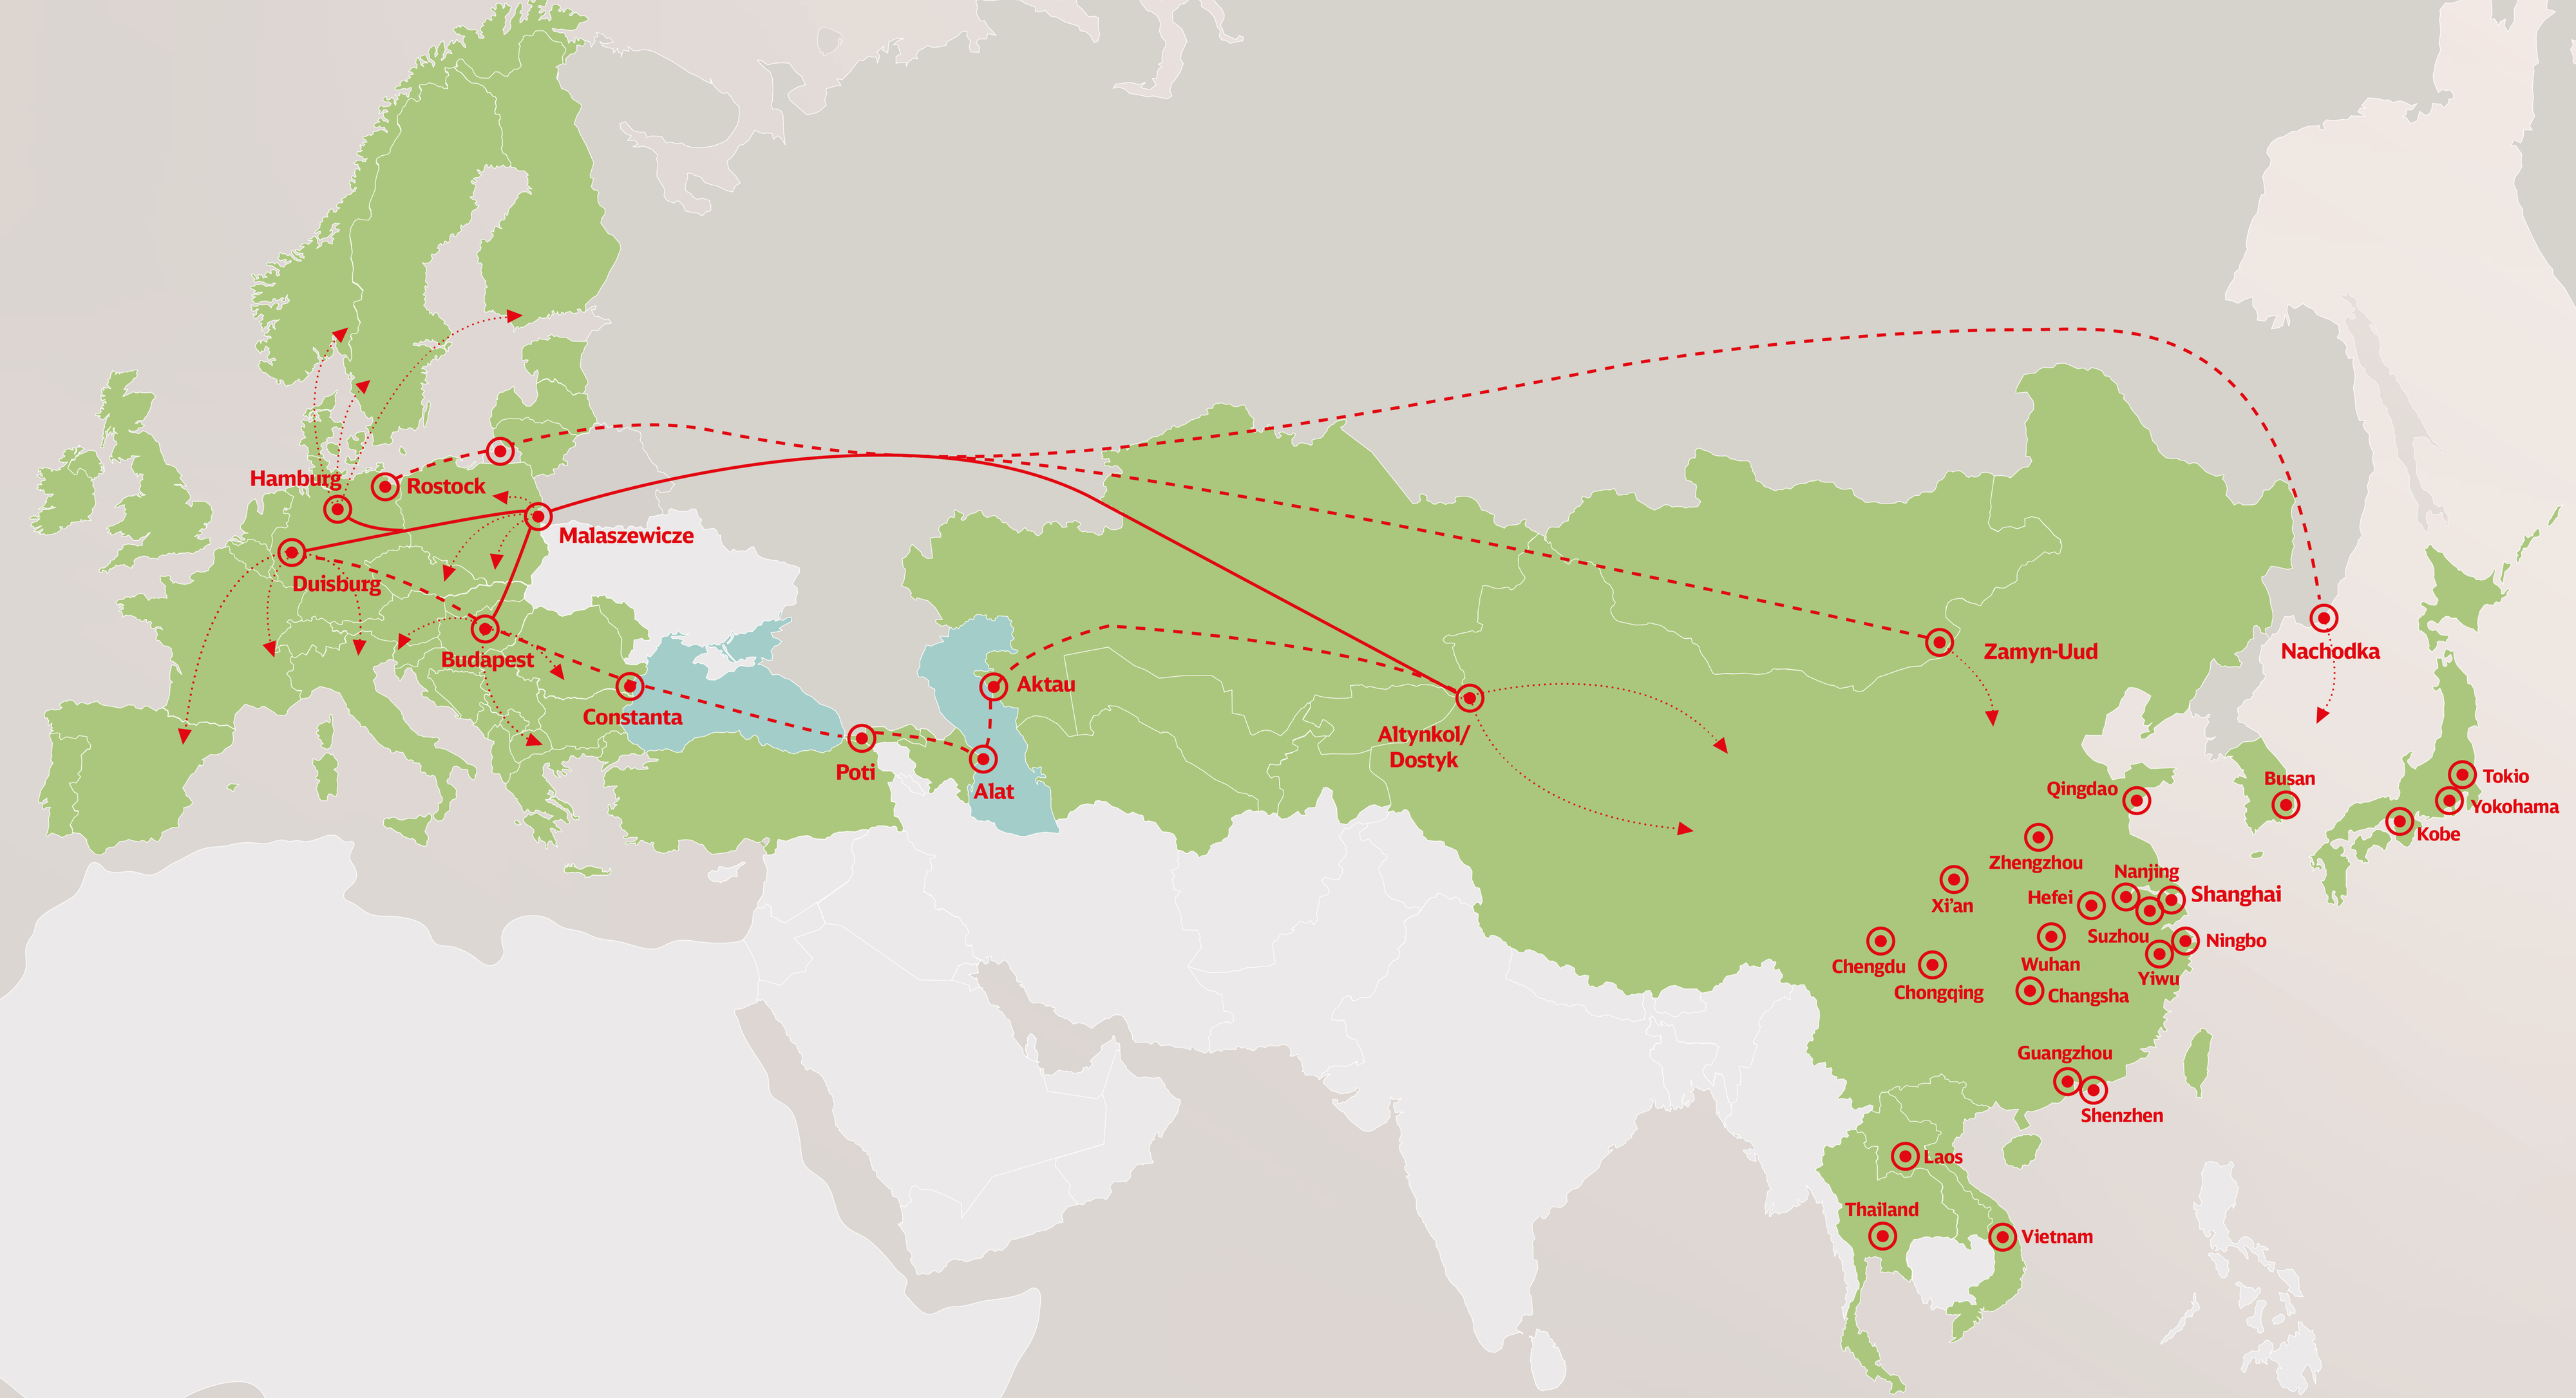 eurasia-rail-networks-europe-china